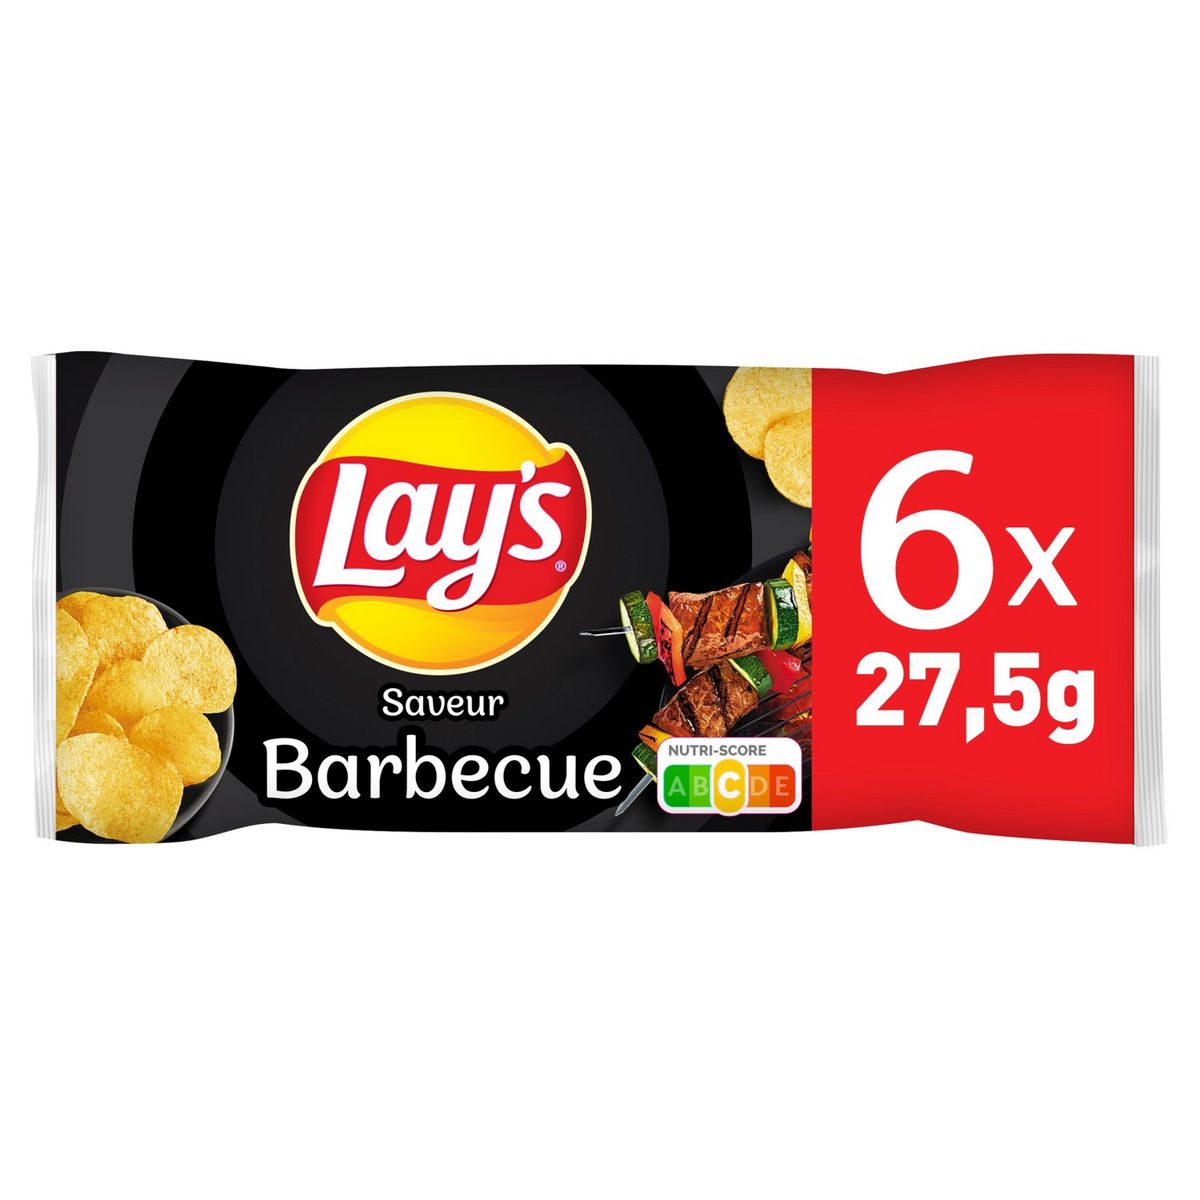 LAY'S Chips saveur barbecue en sachets individuels lot de 6 6x27,5g